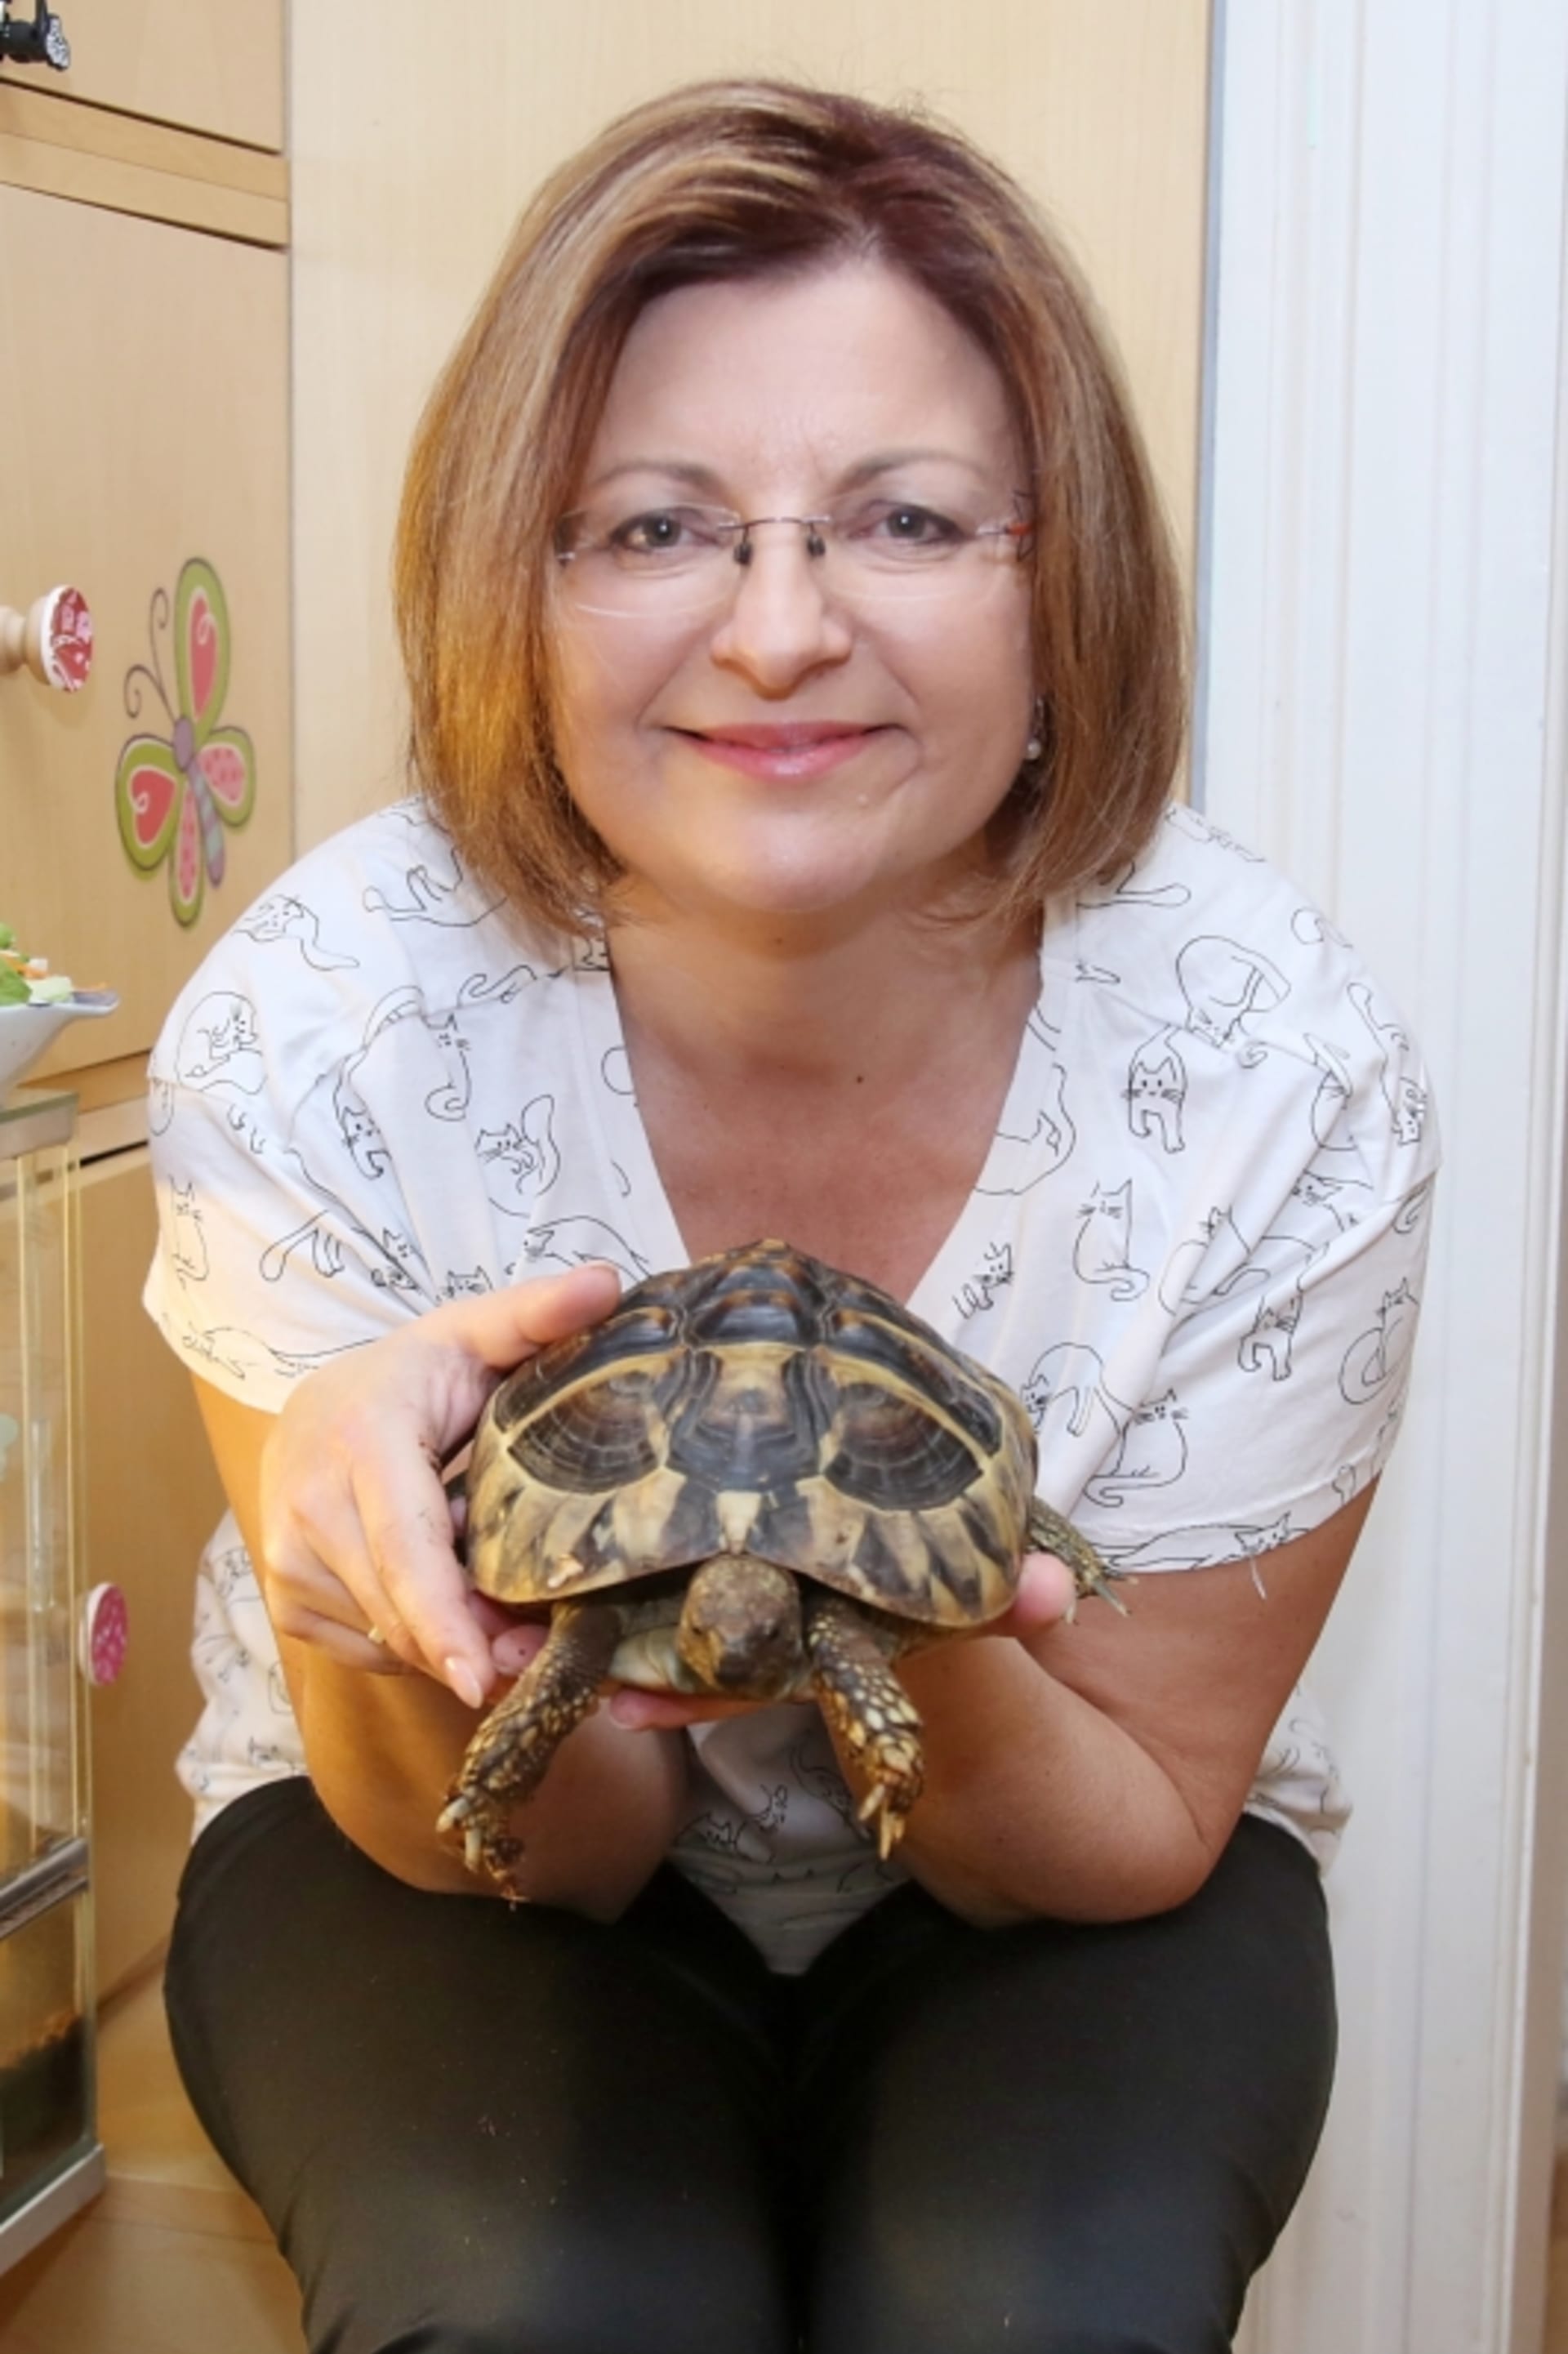 Paní veterinářka Míša nám poradí s chovem želv